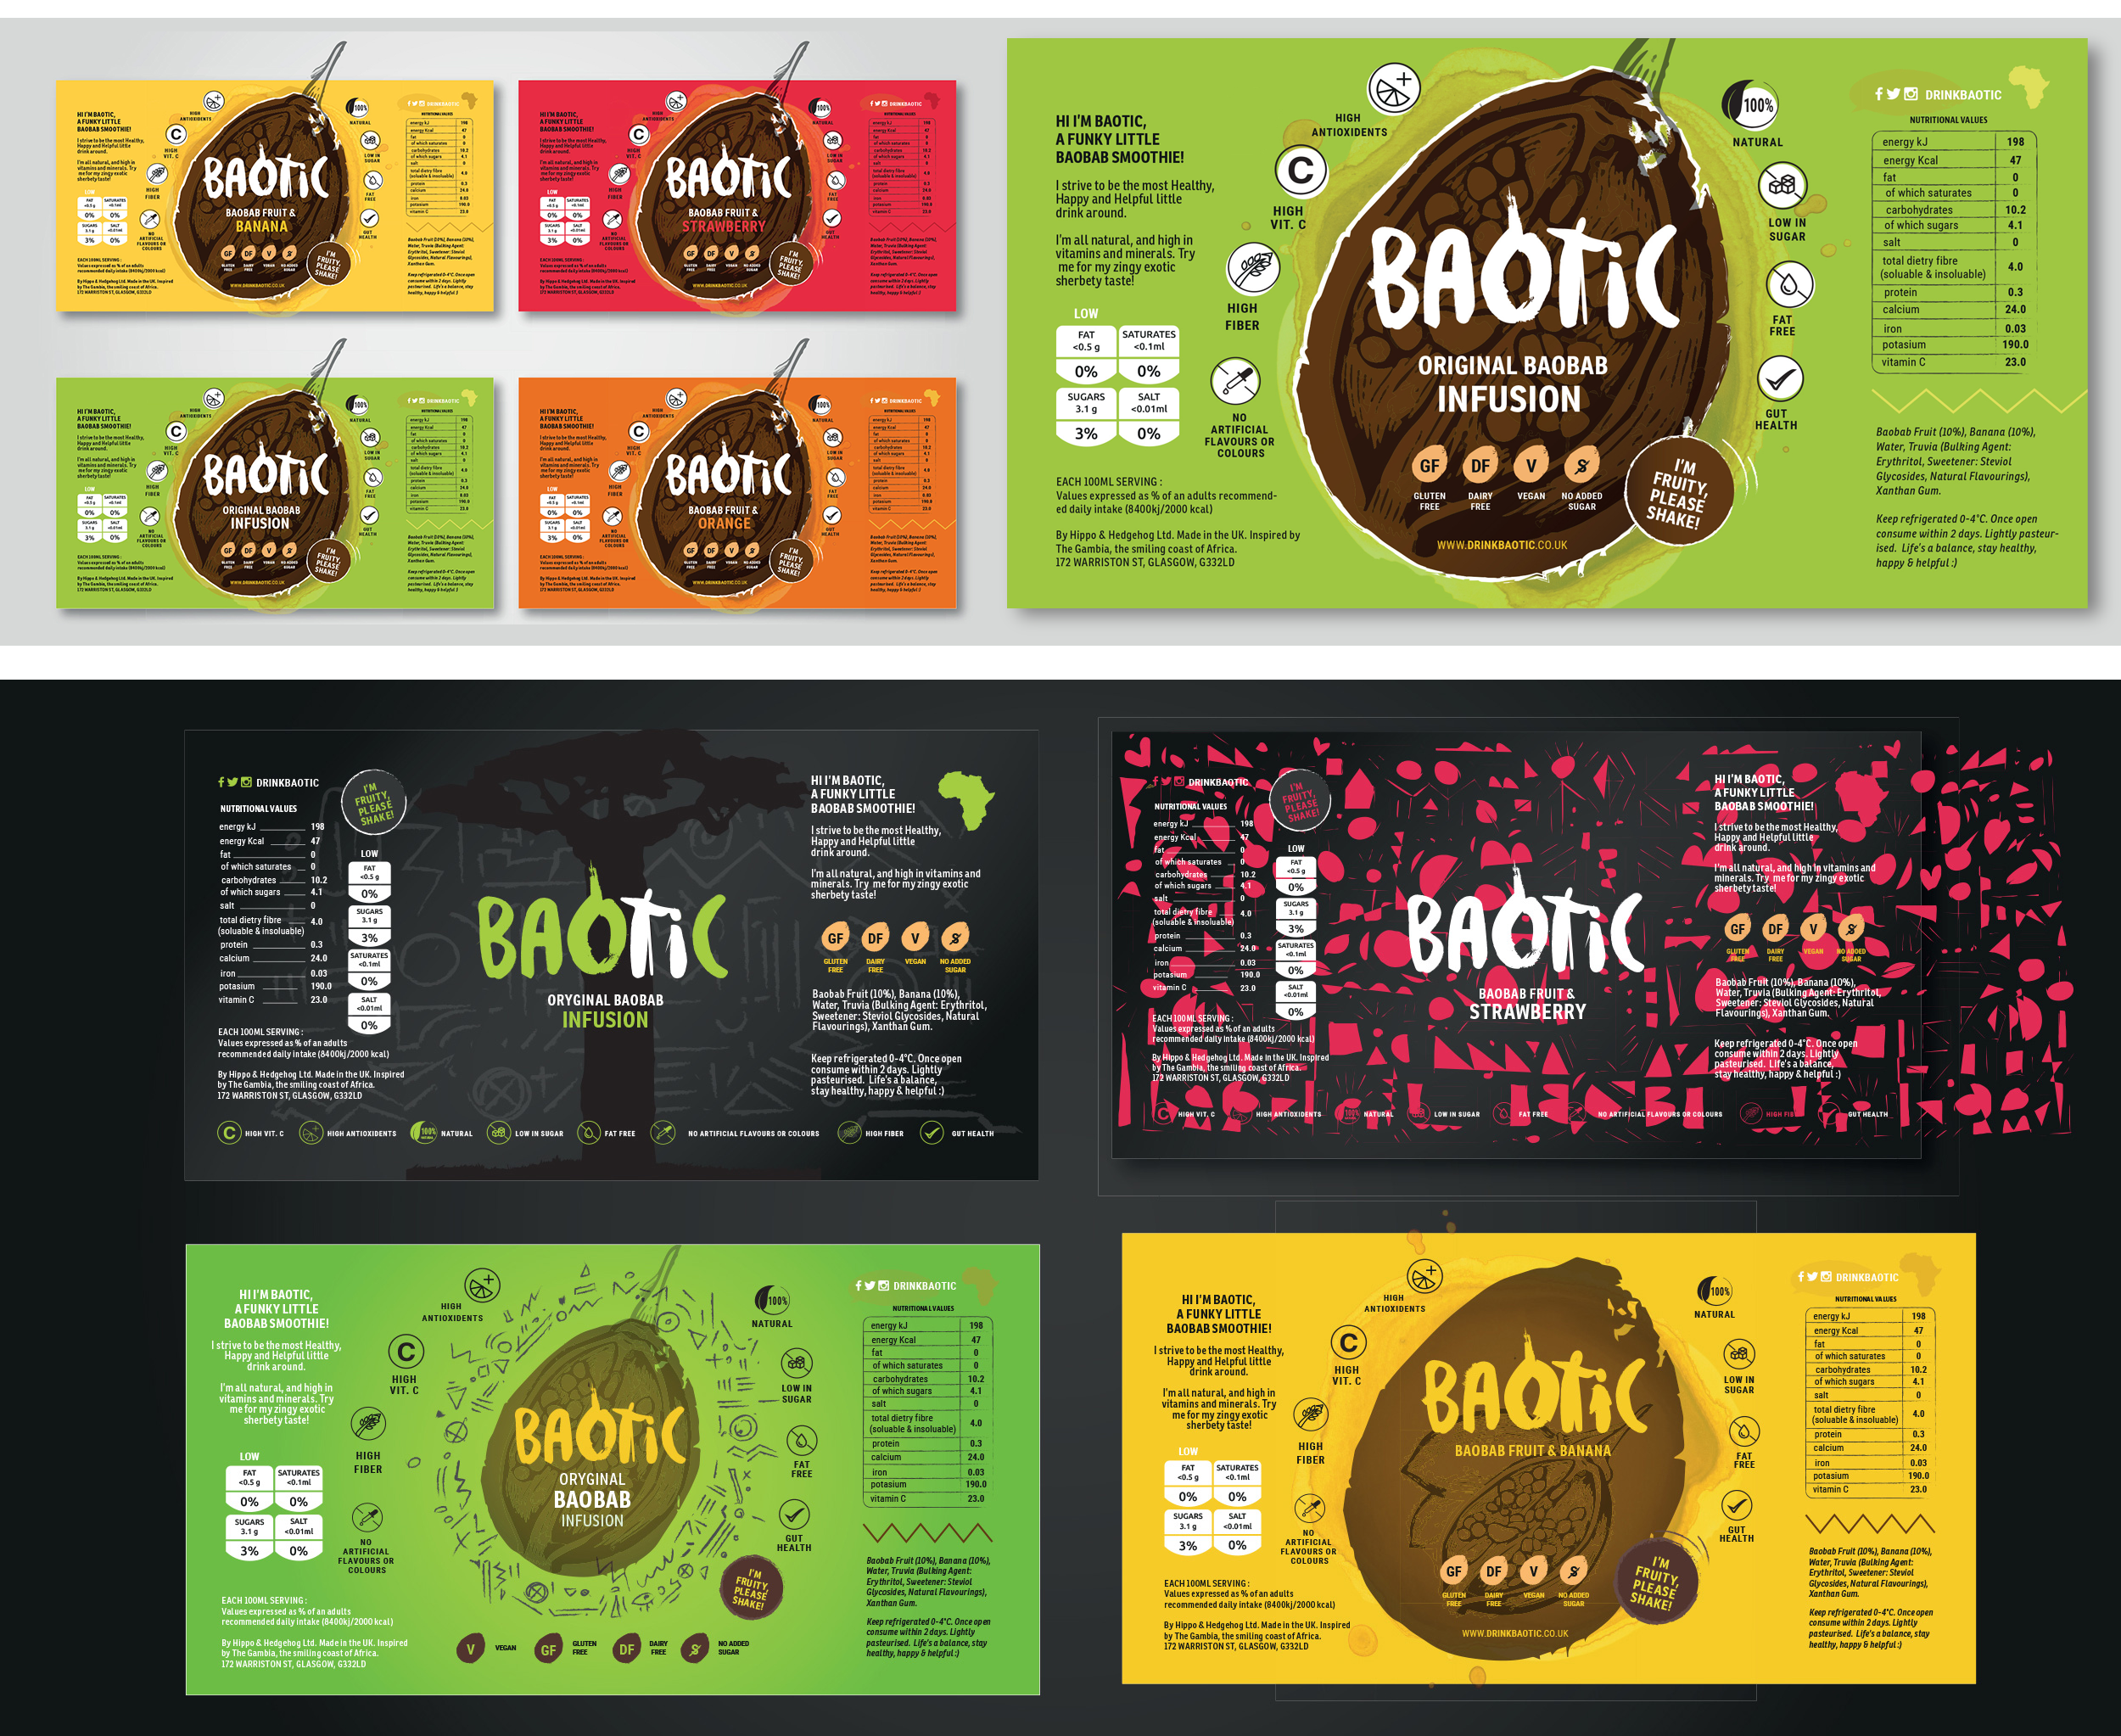  Drink-Baotic, Evocative Packaging Design, Further Development Images